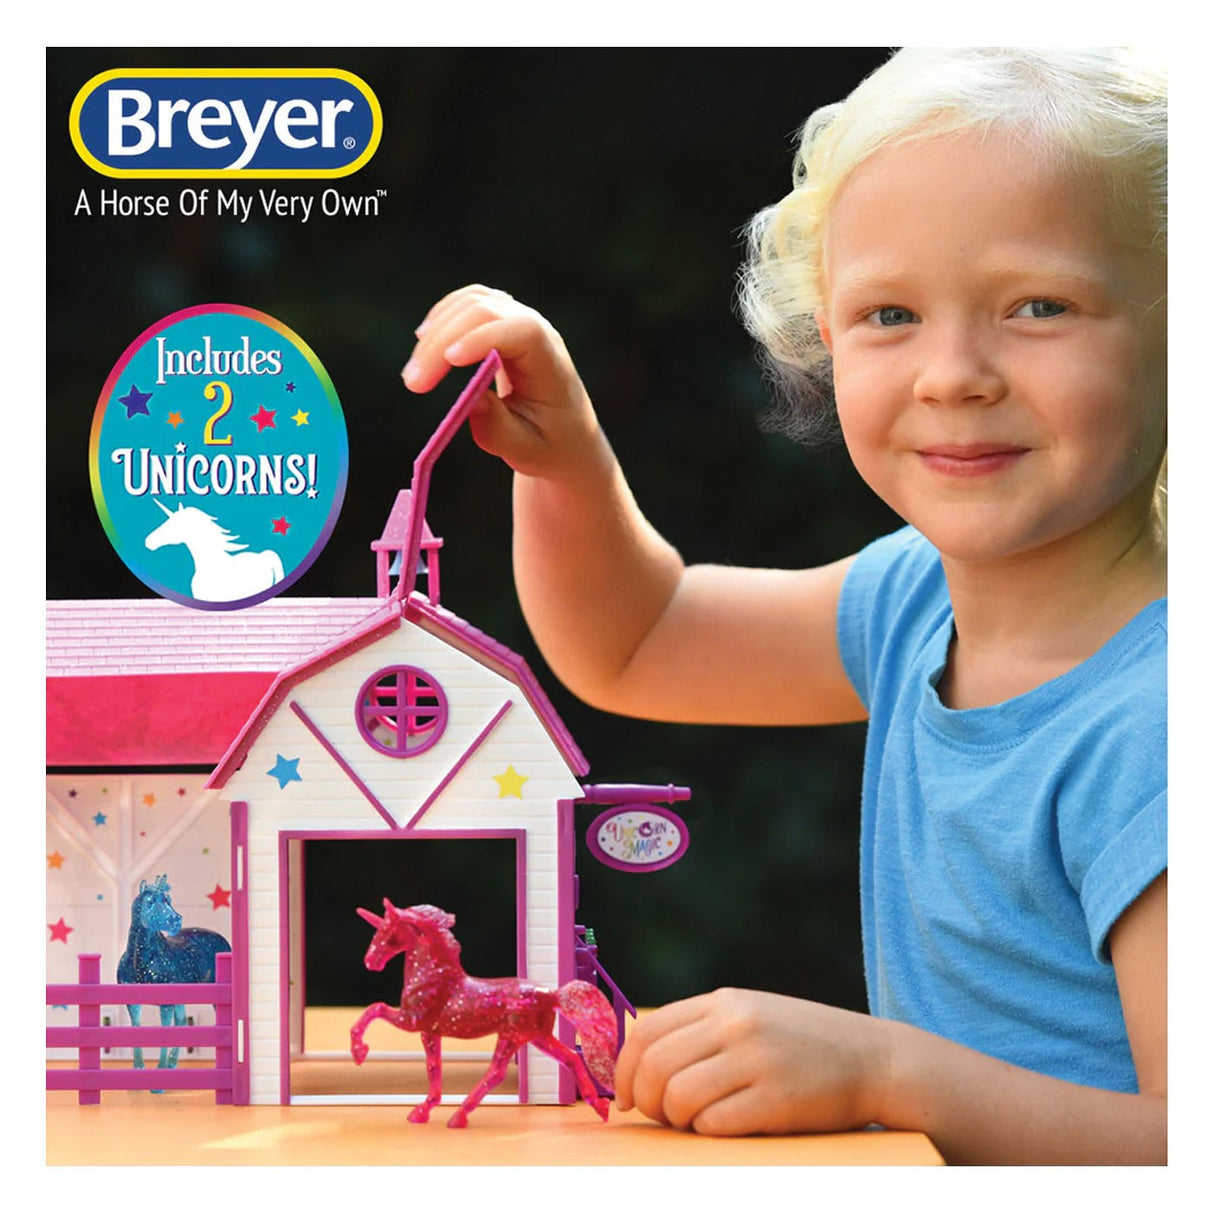 Breyer Unicorn Magic Sparkle Playset